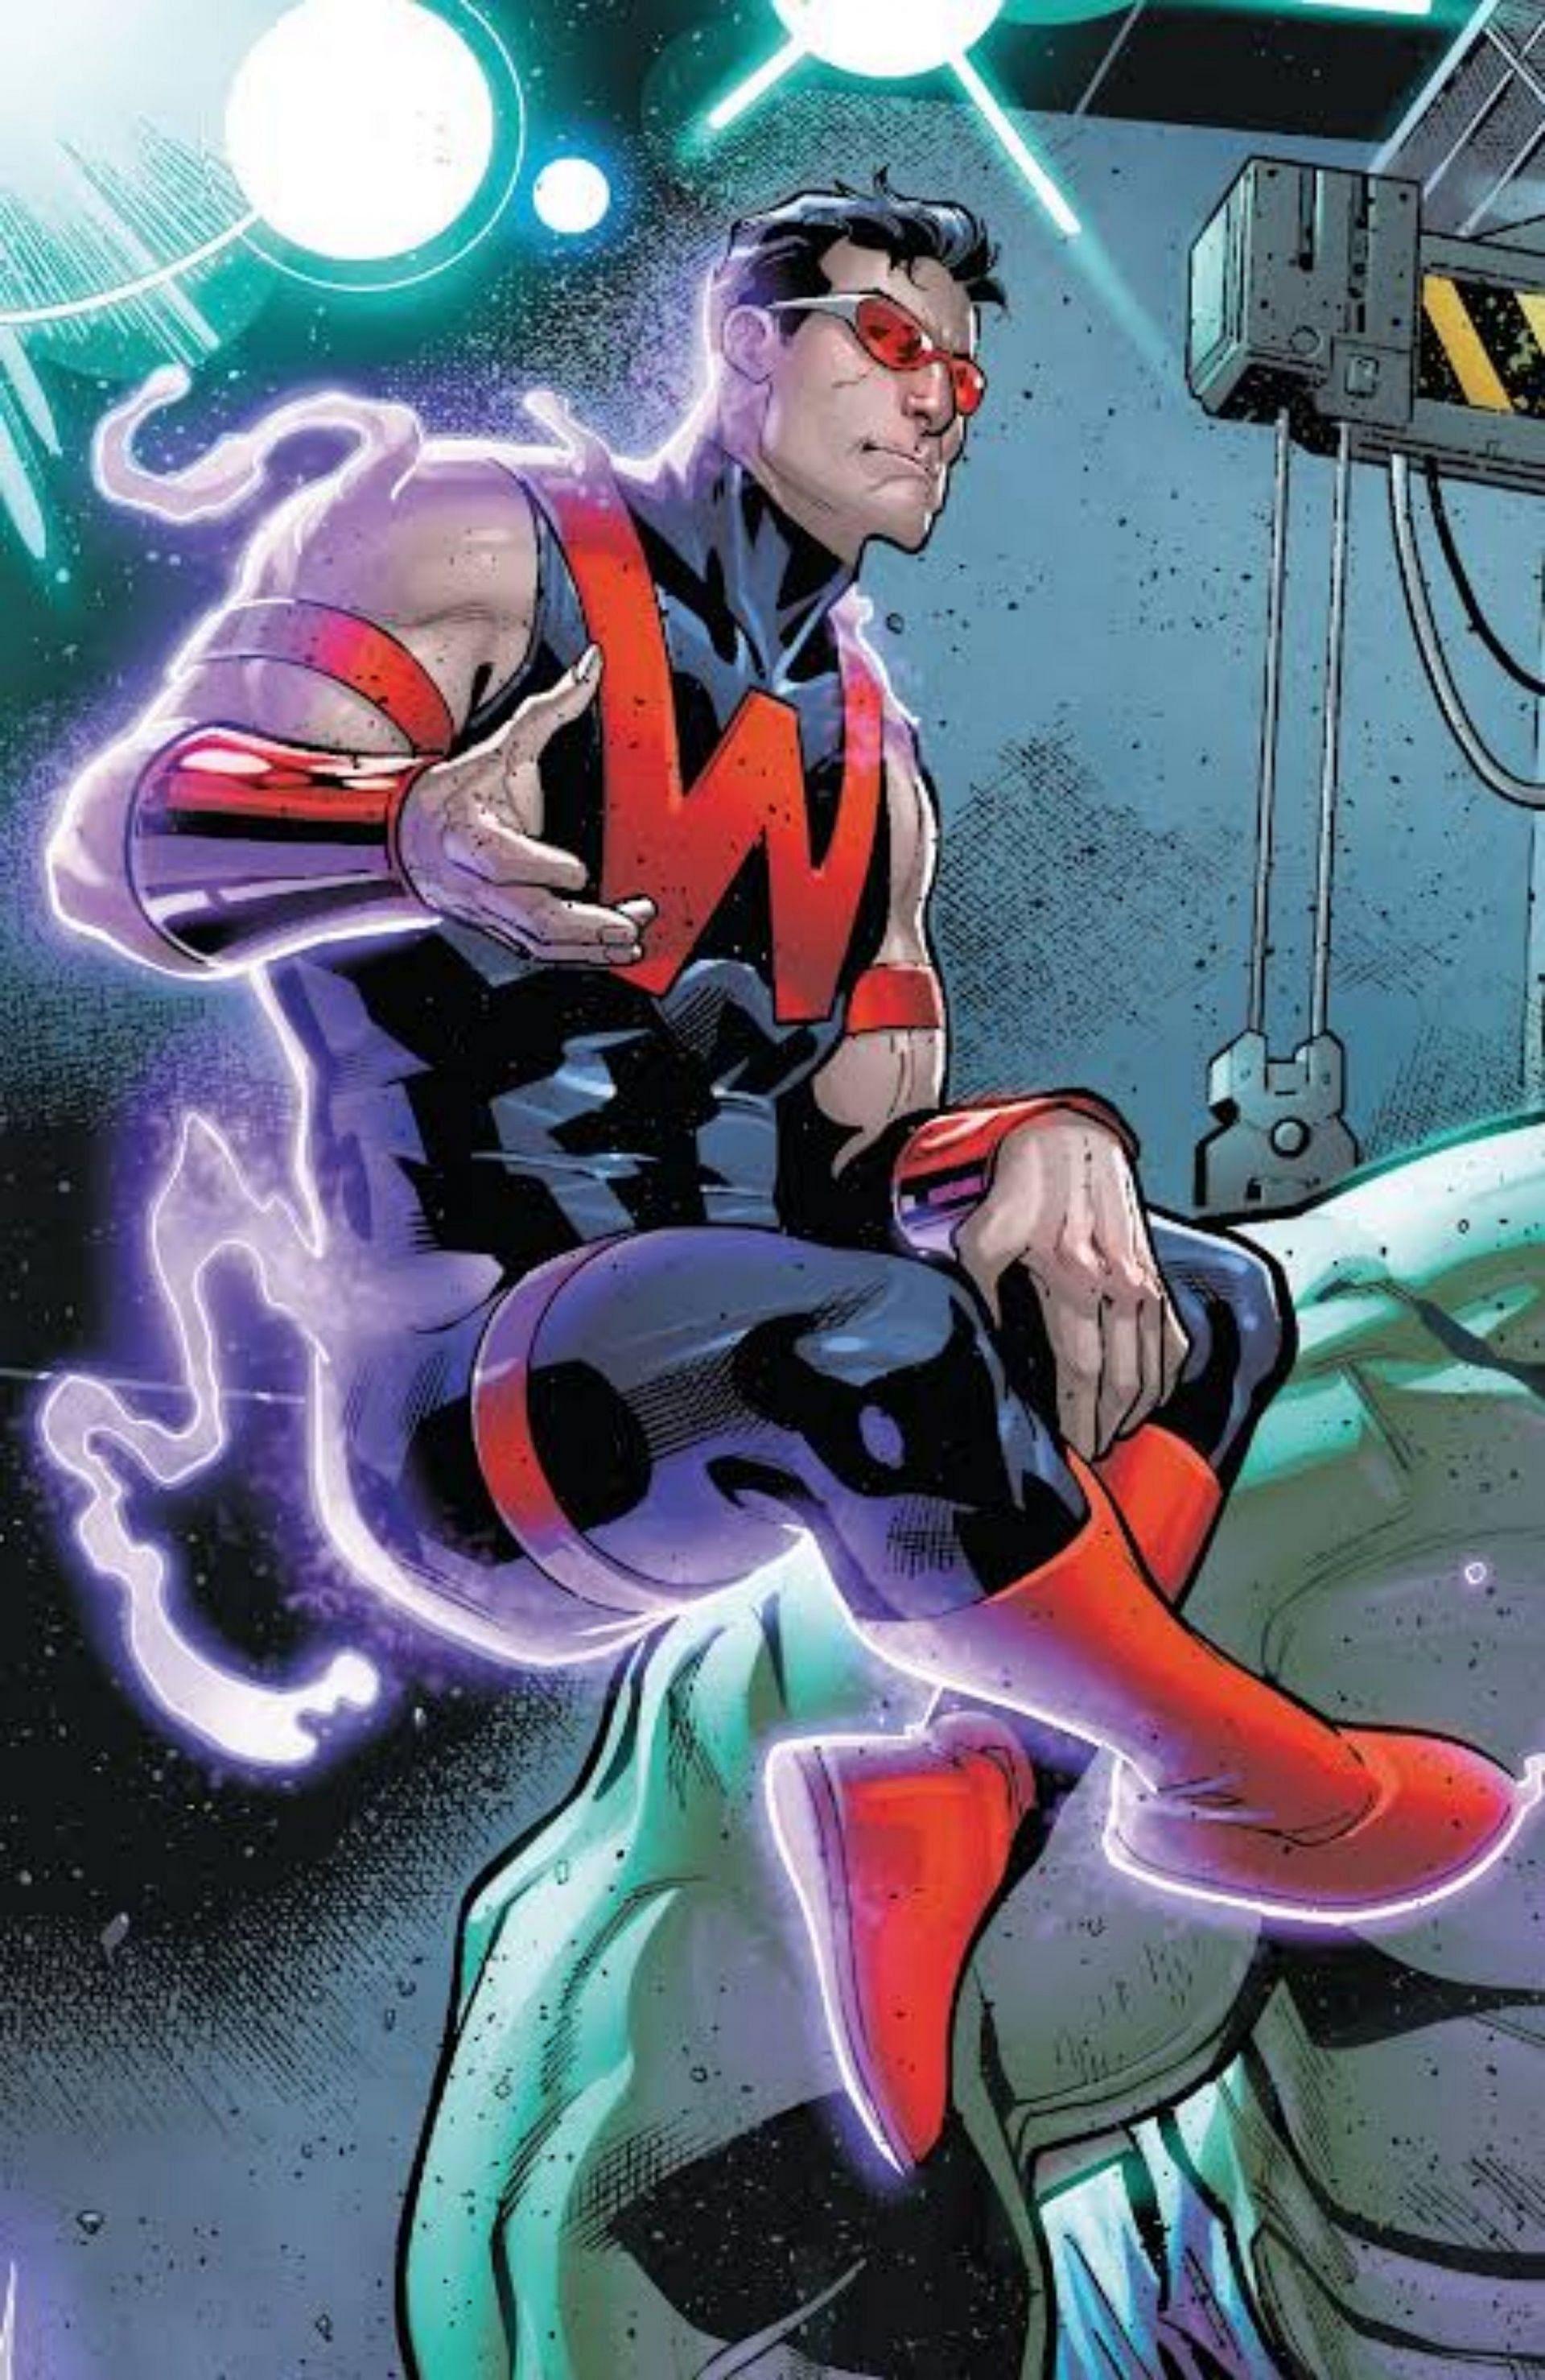 Wonder Man in the Marvel Comics (Image via Marvel Comics)